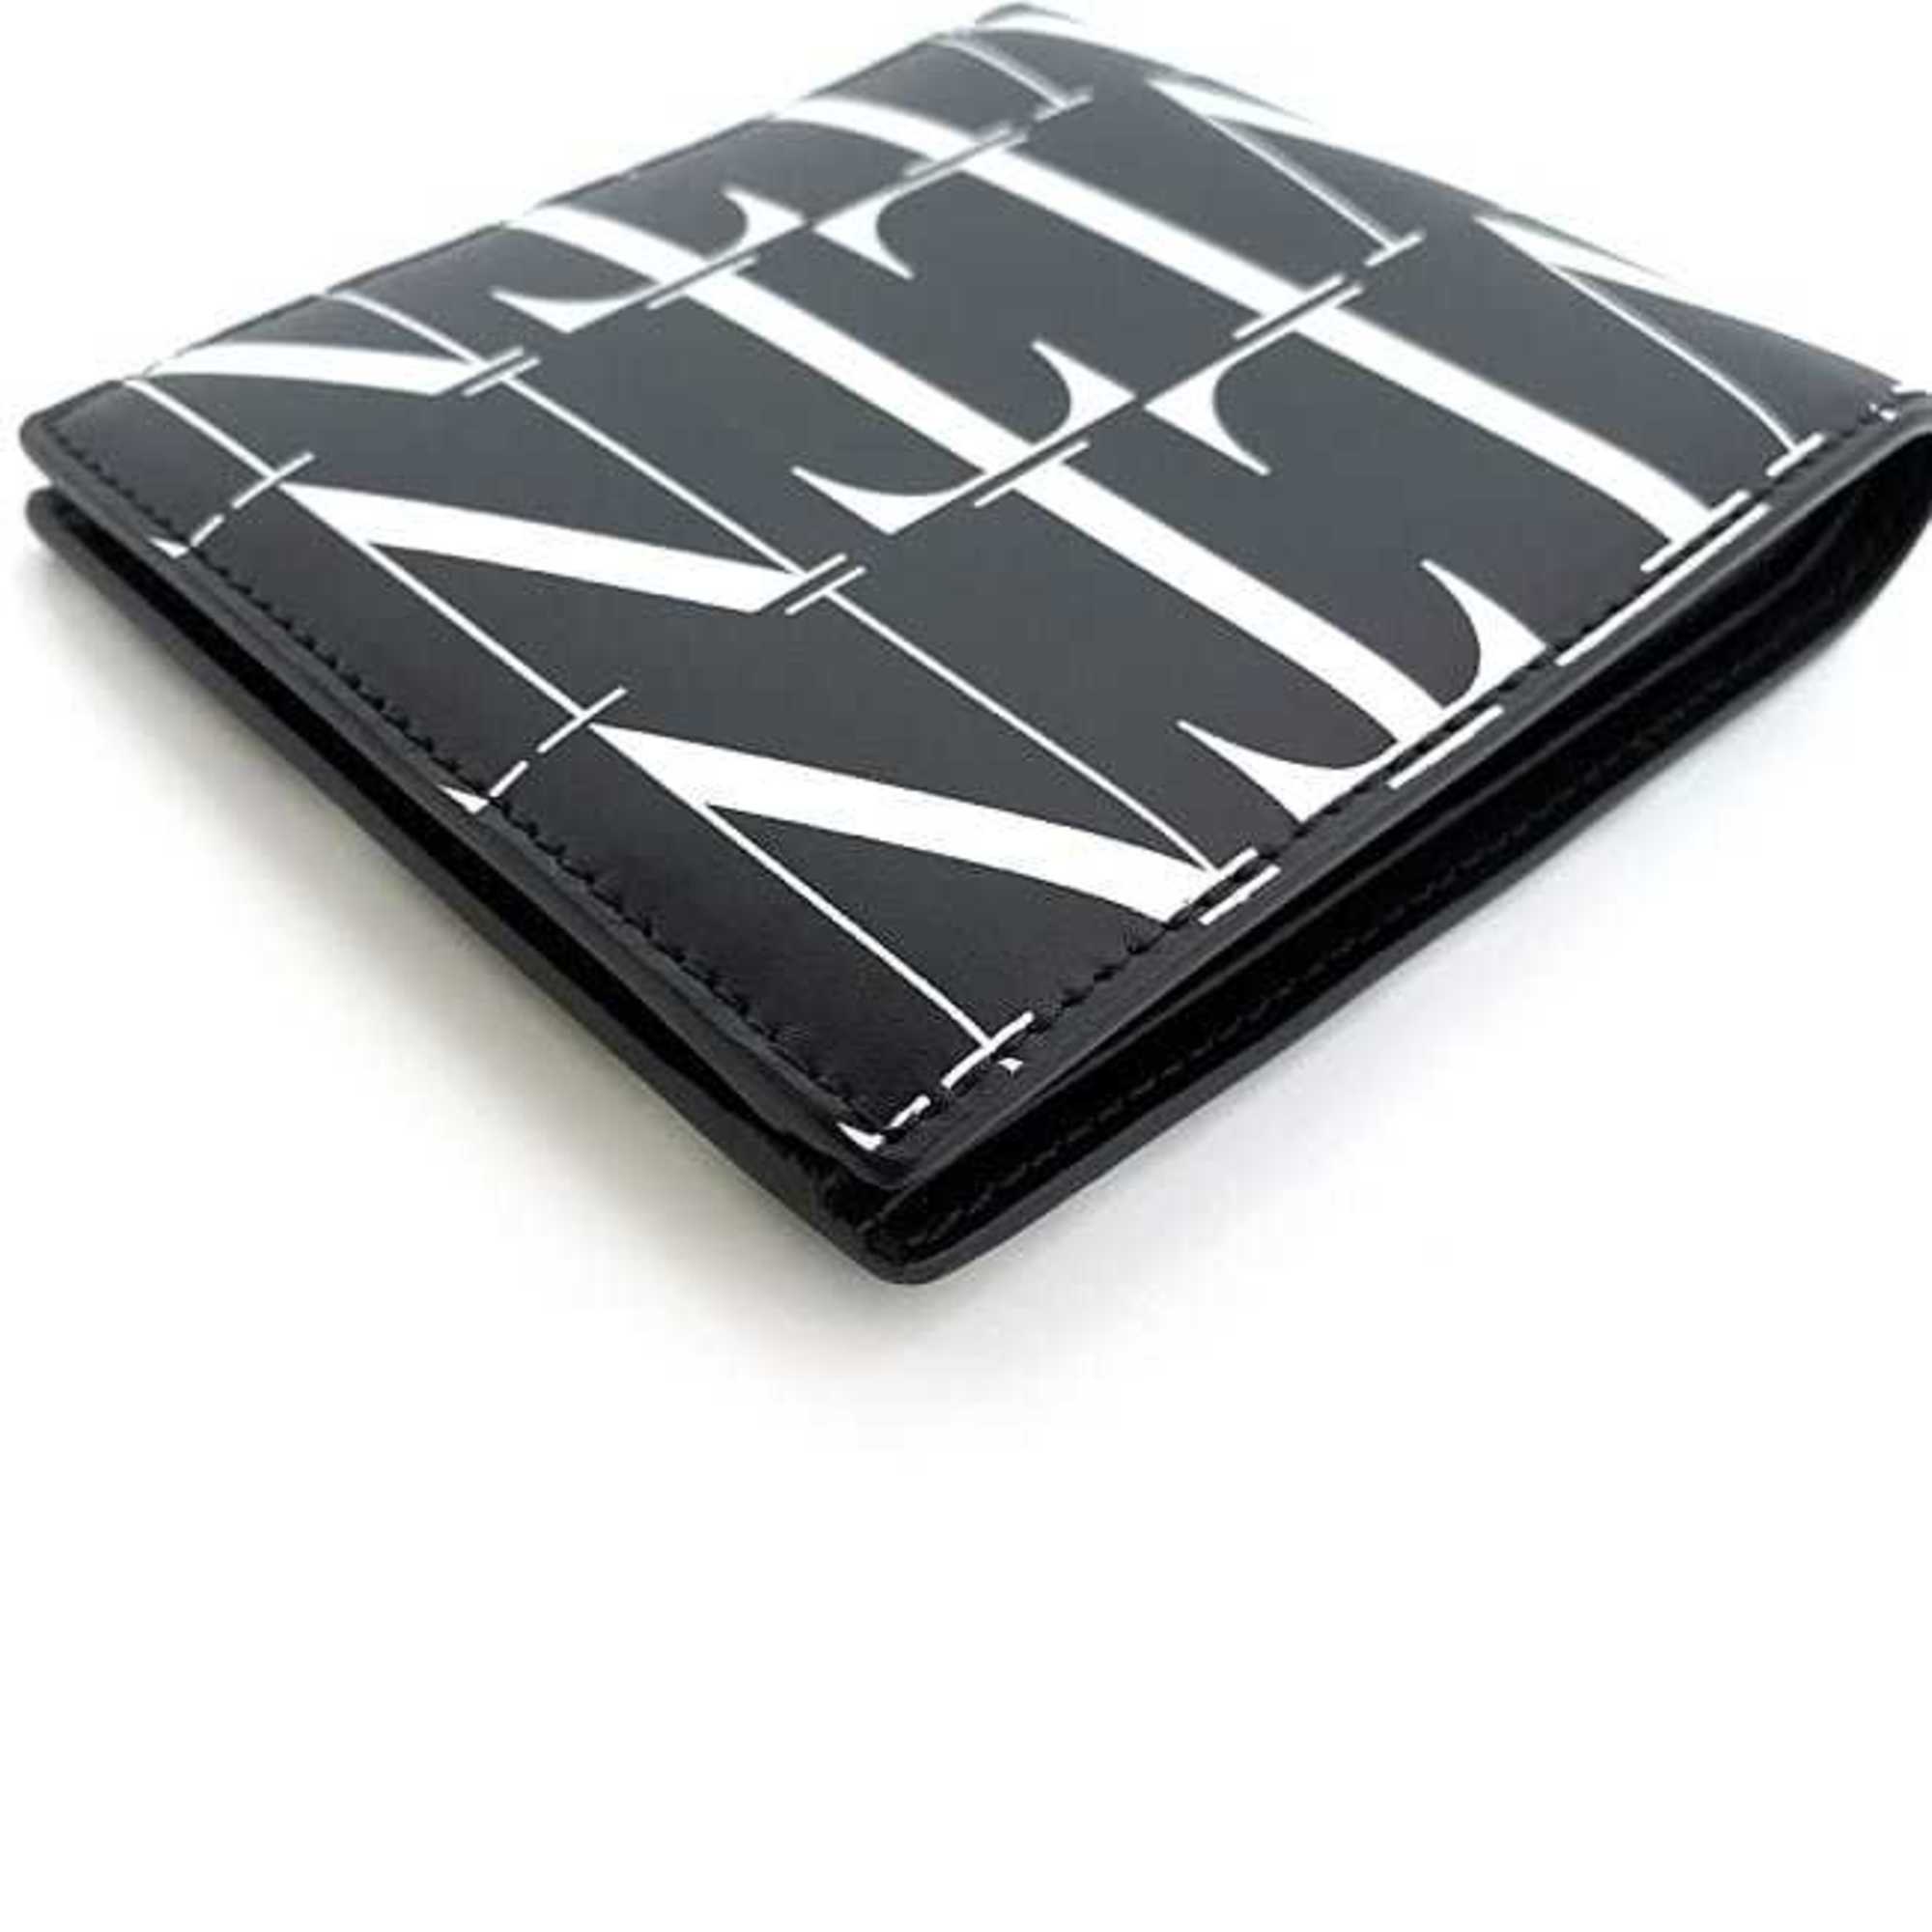 Valentino Garavani Bi-fold Wallet Black White WY2P0654 ec-20638 Billfold Leather VALENTINO GARAVANI Folding Compact Unisex